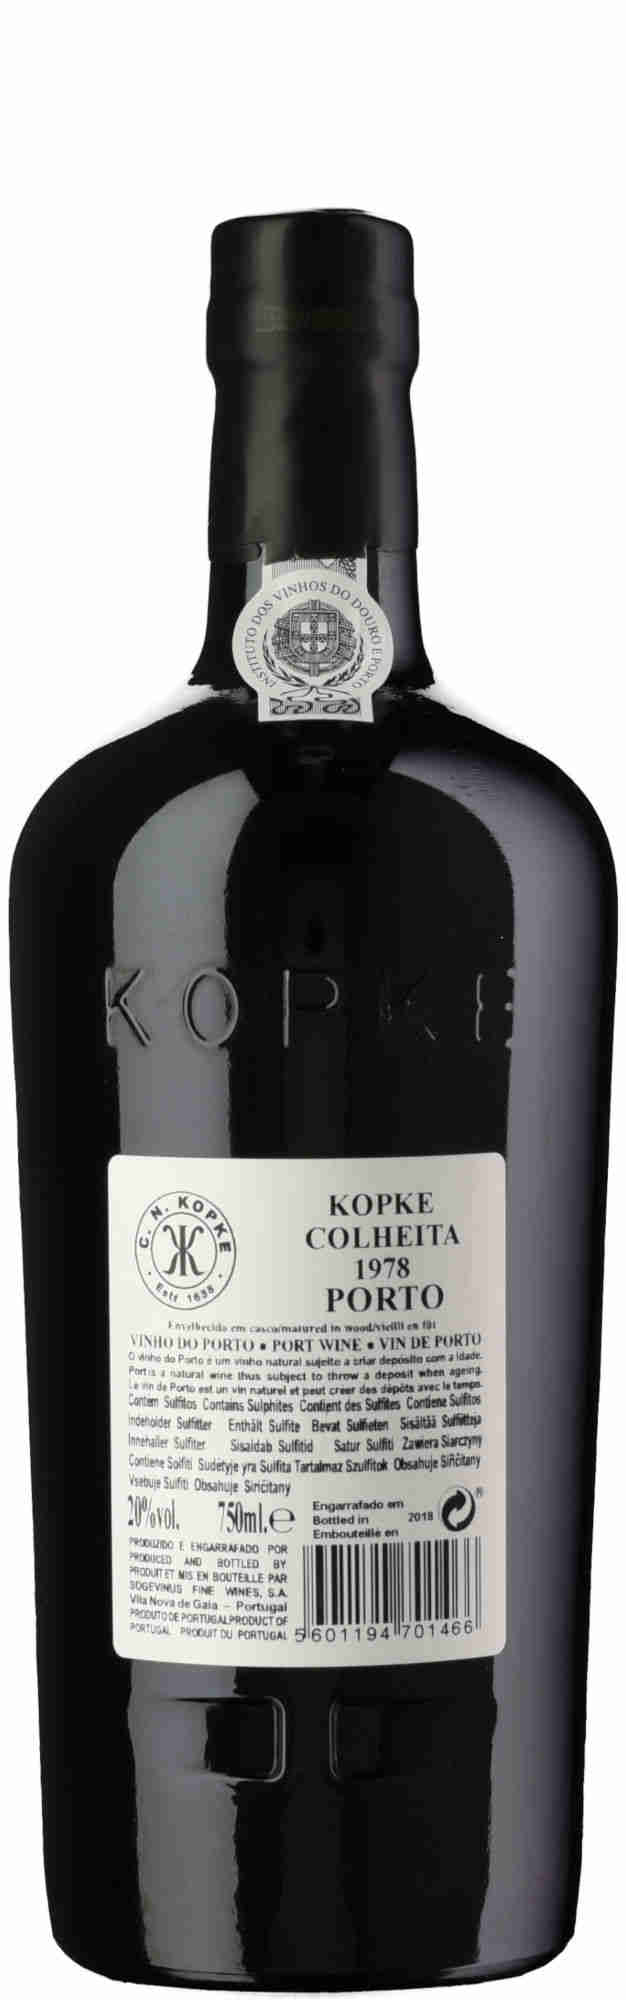 Kopke-Colheita-Port-1978-back